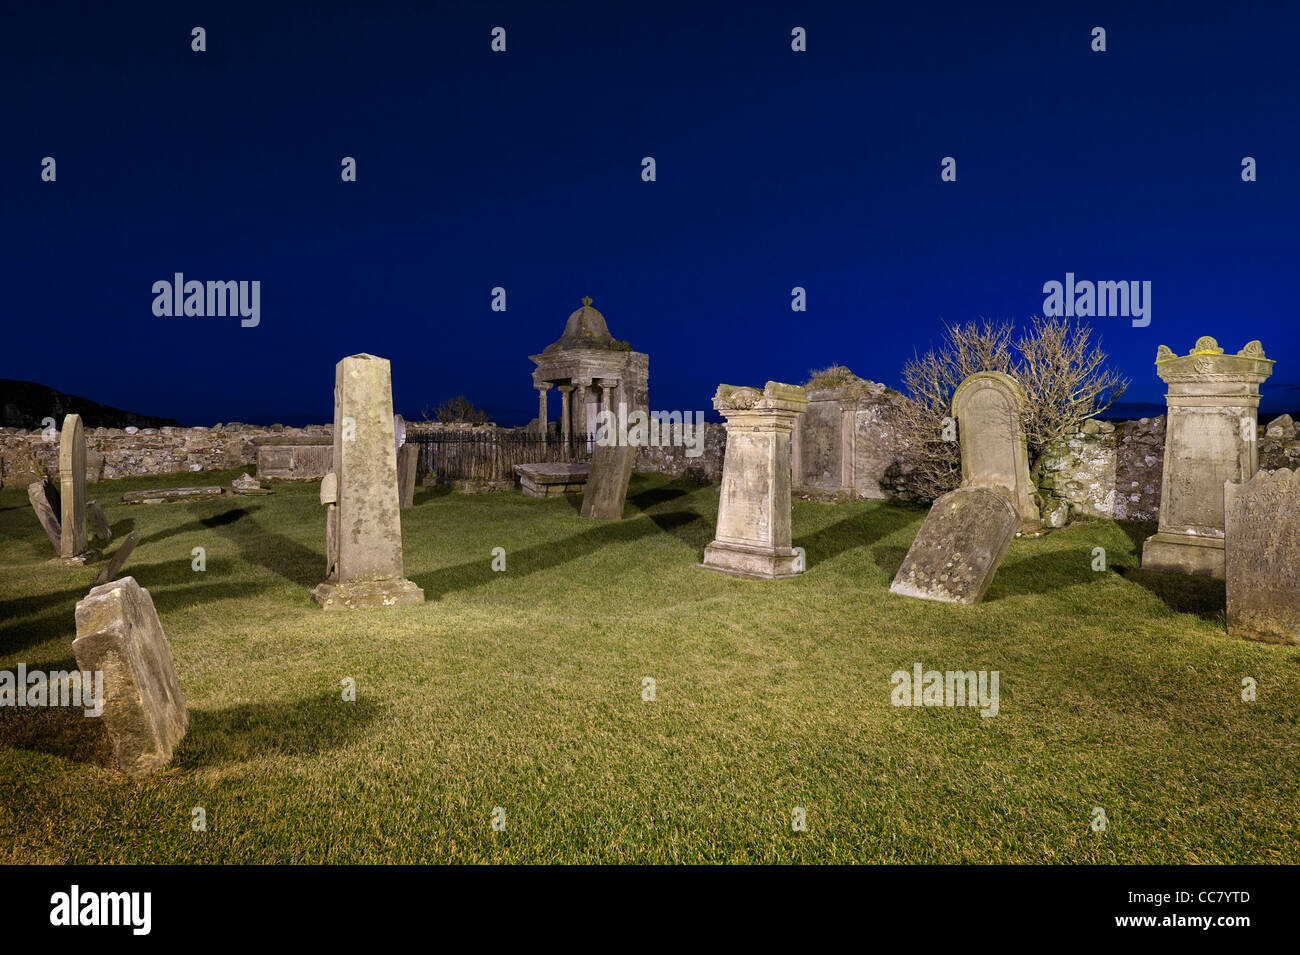 Graveyard at night Stock Photo